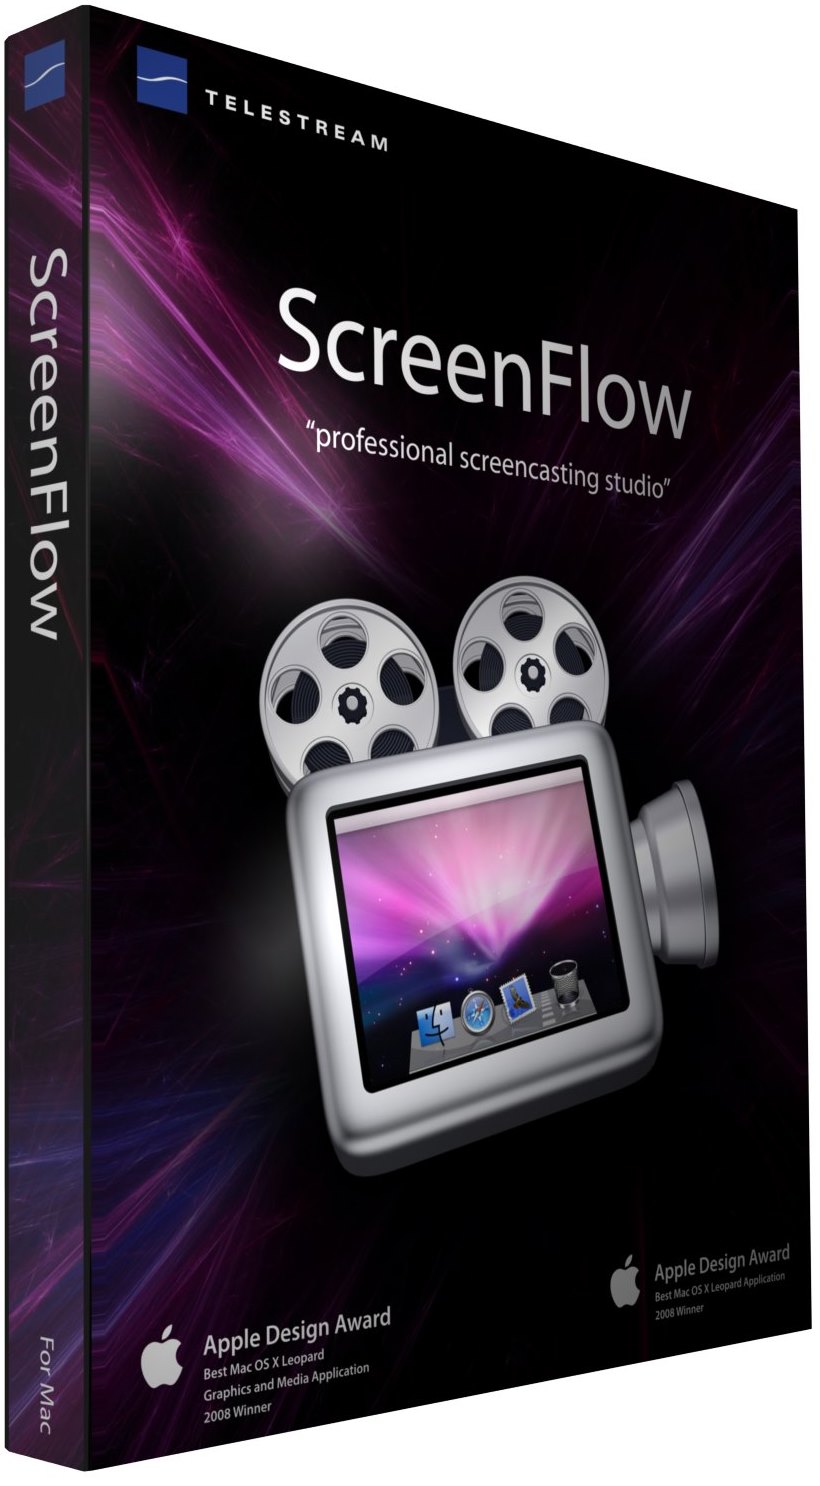 screenflow for mac free download full version